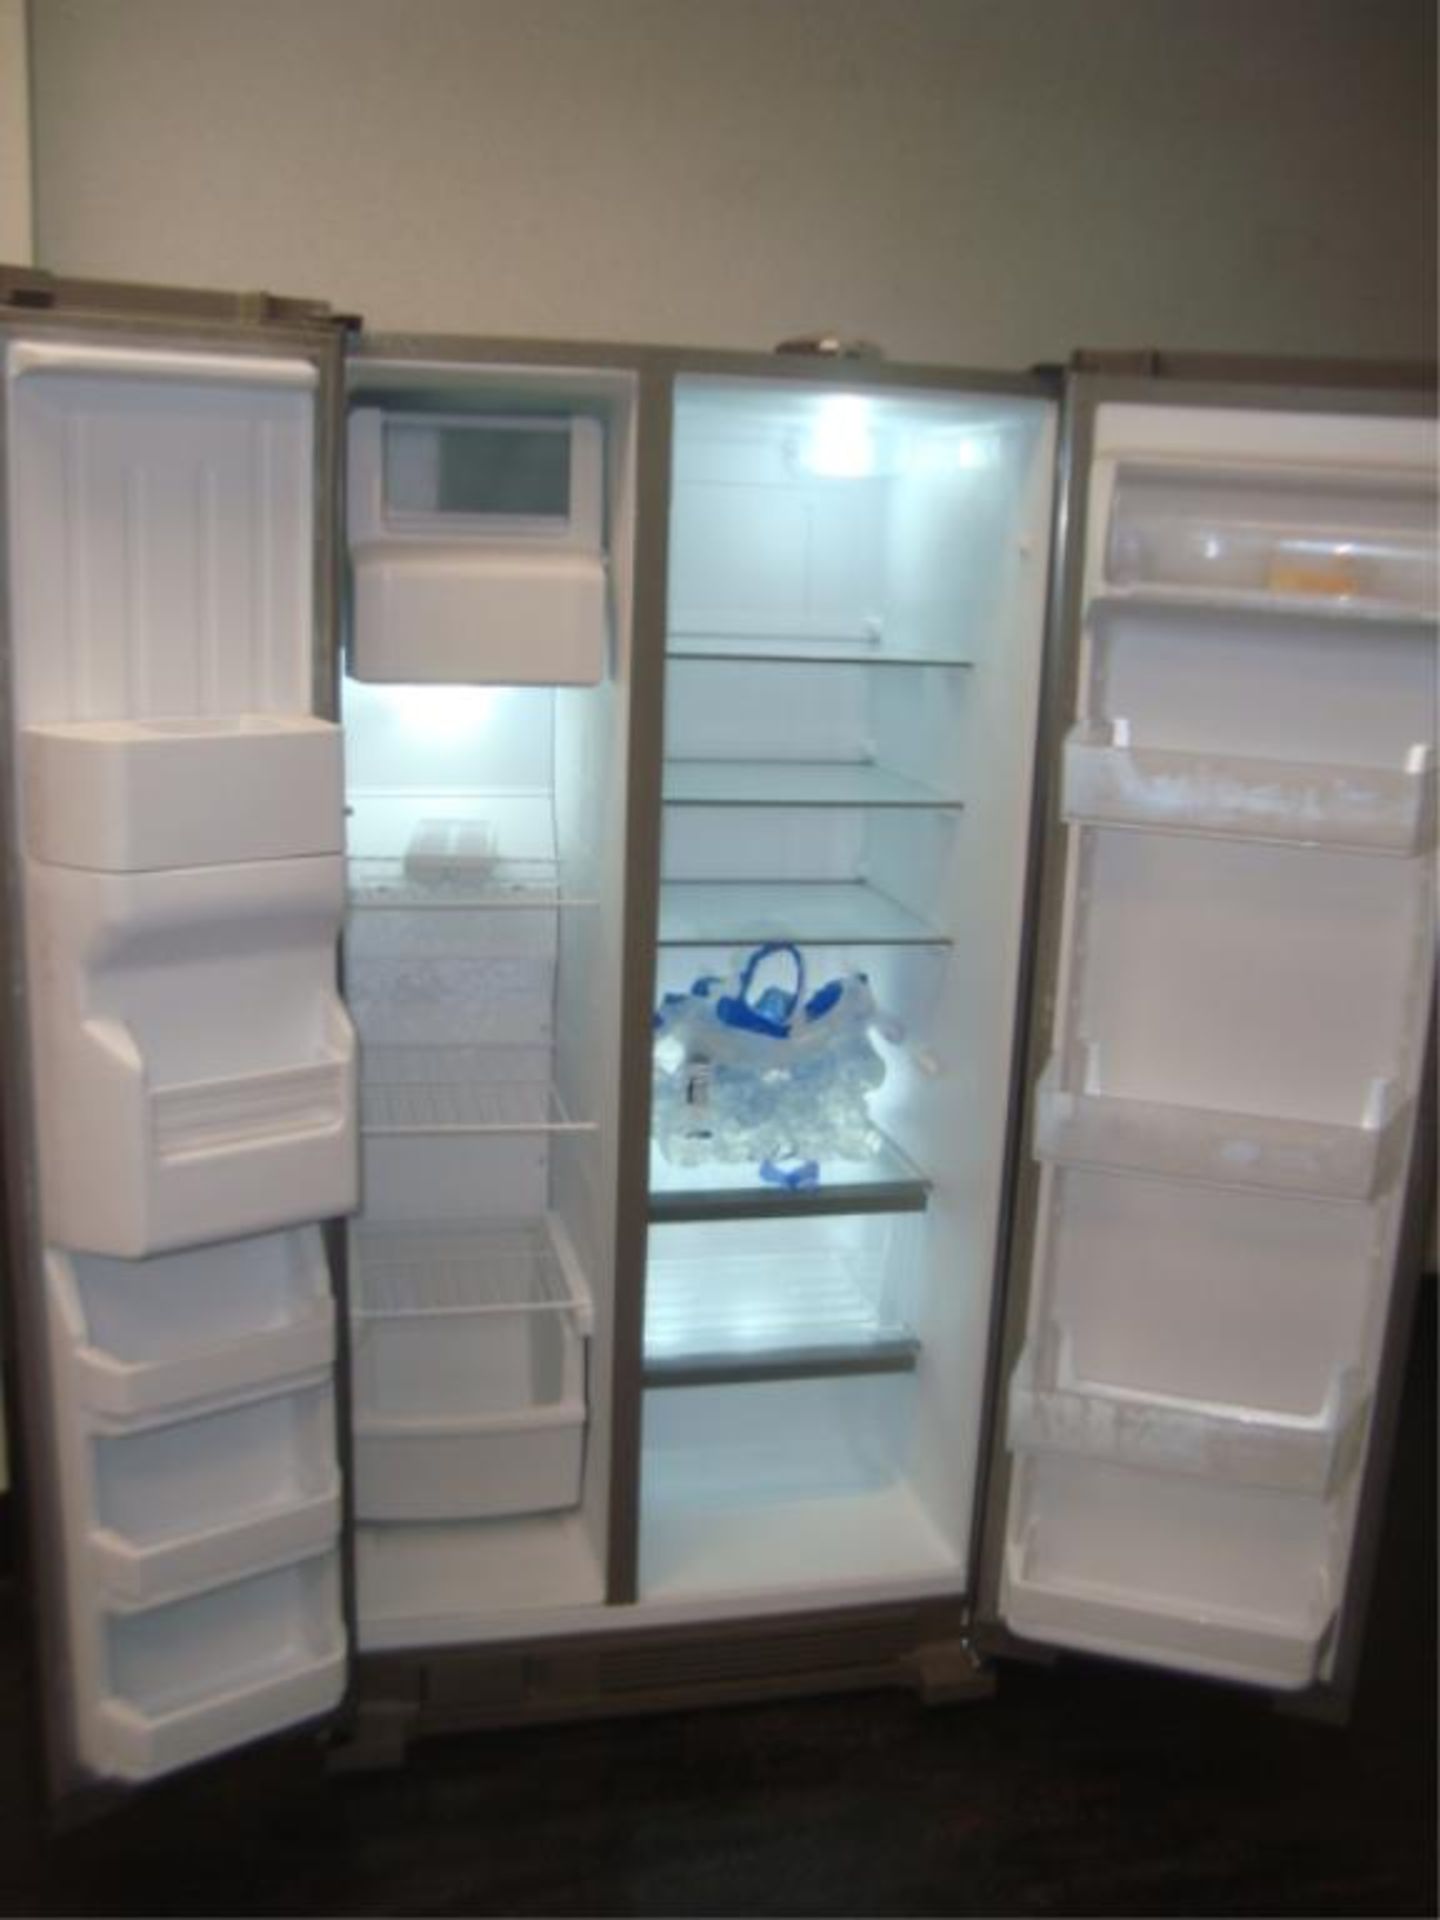 Lunchroom Refrigerators - Image 4 of 9